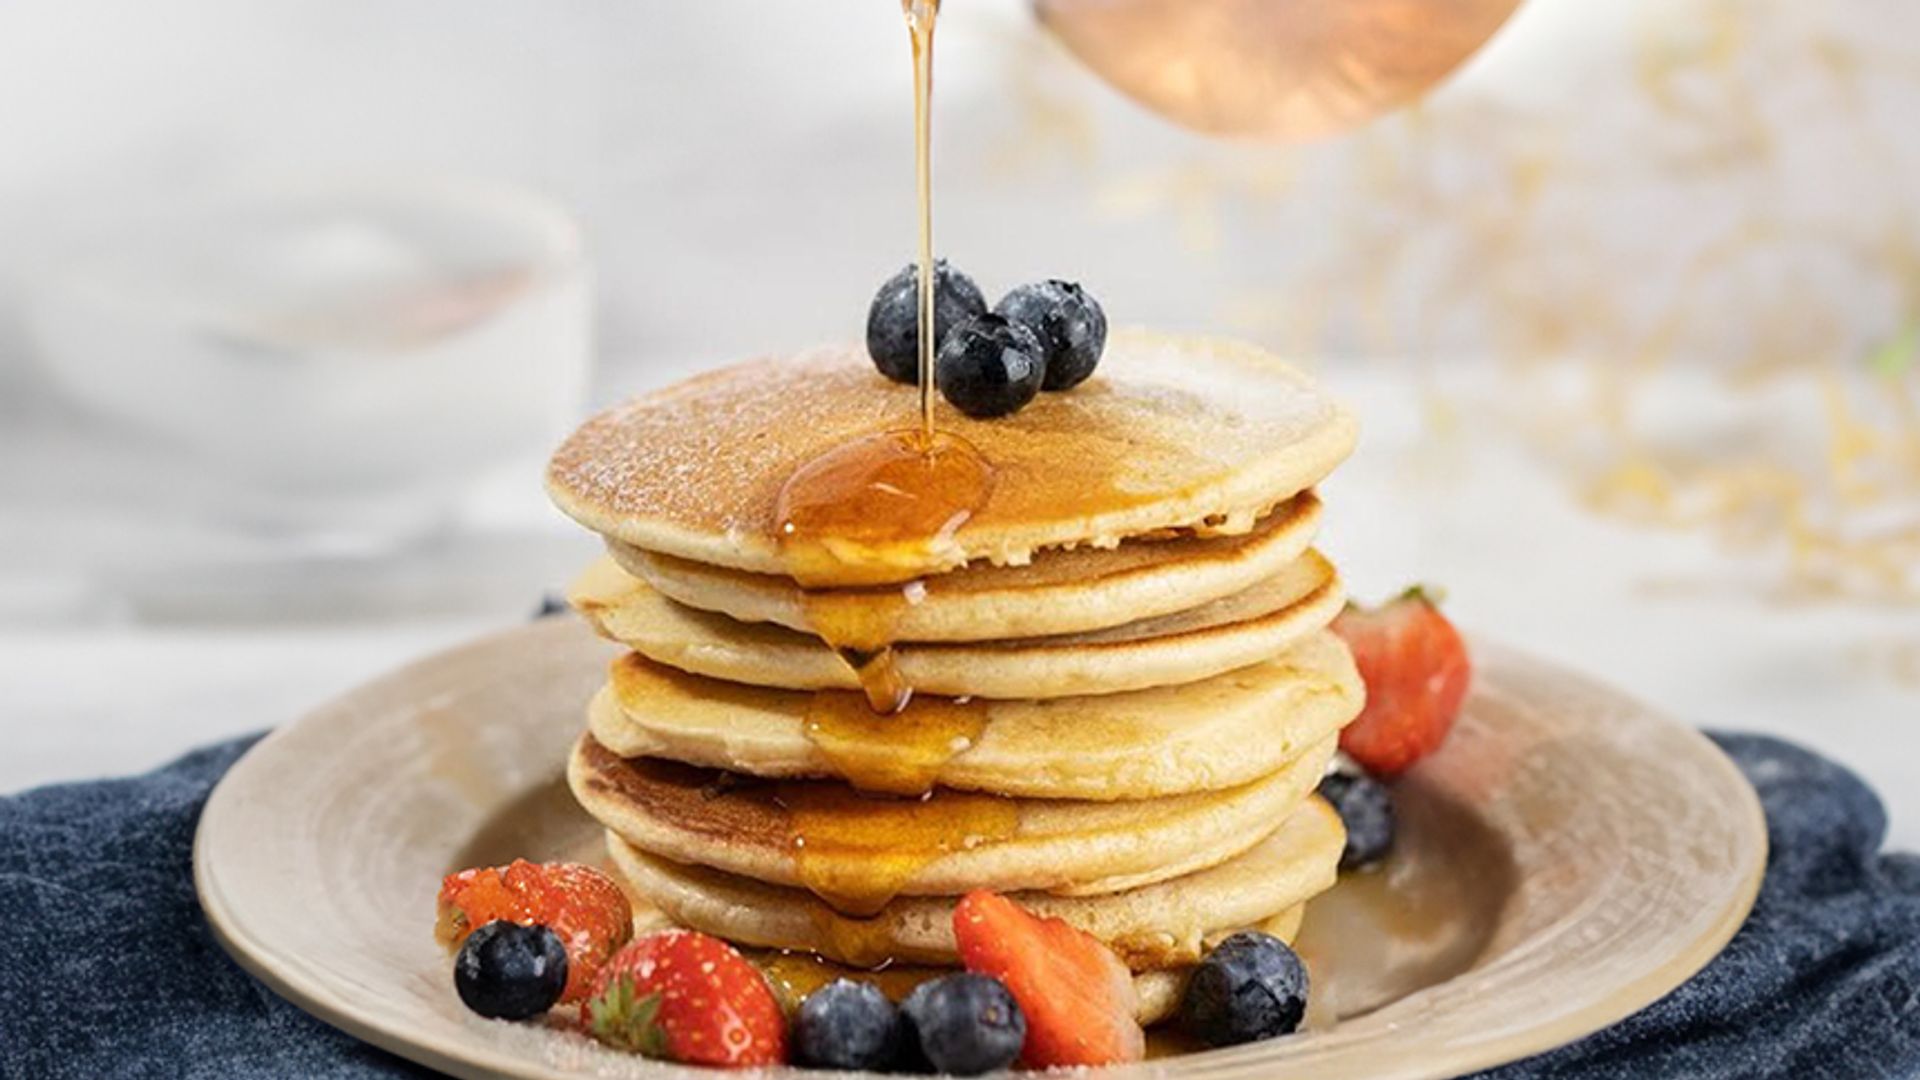 DIE 3 besten Pancake-Rezepte! American pancakes - Poffertjes - japanische Soufflee Pancakes